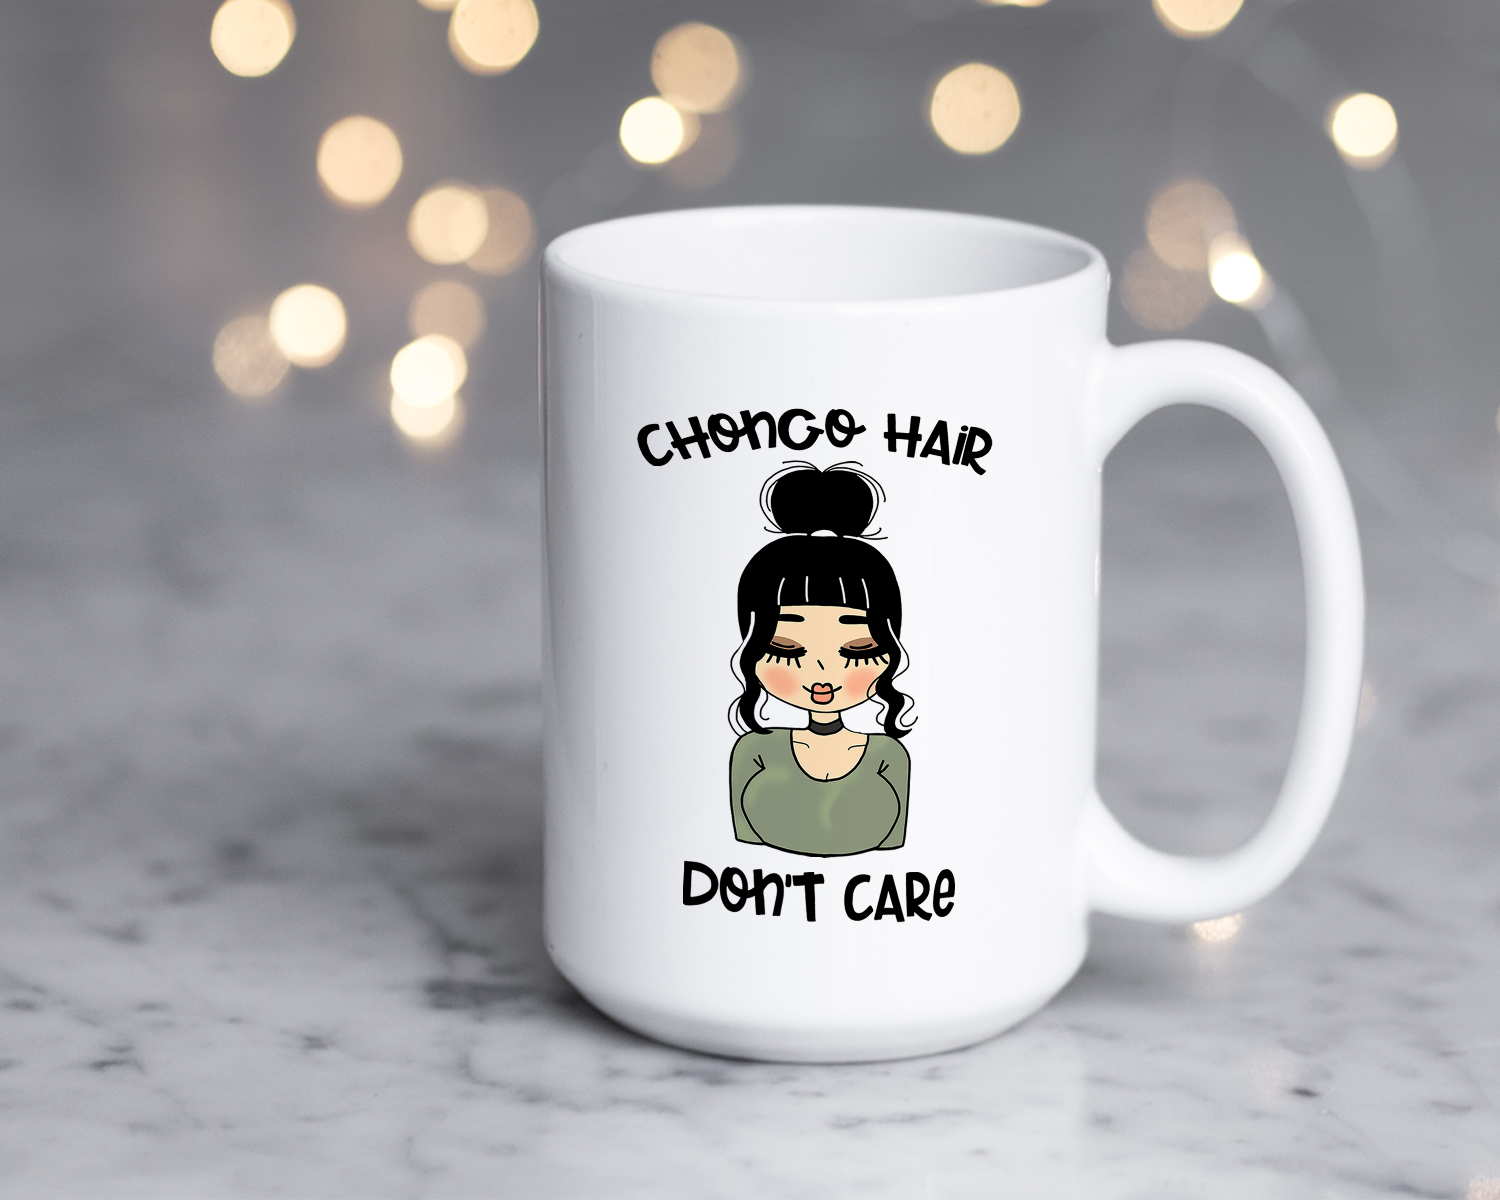 Chongo Hair Don't Care Coffee Mug